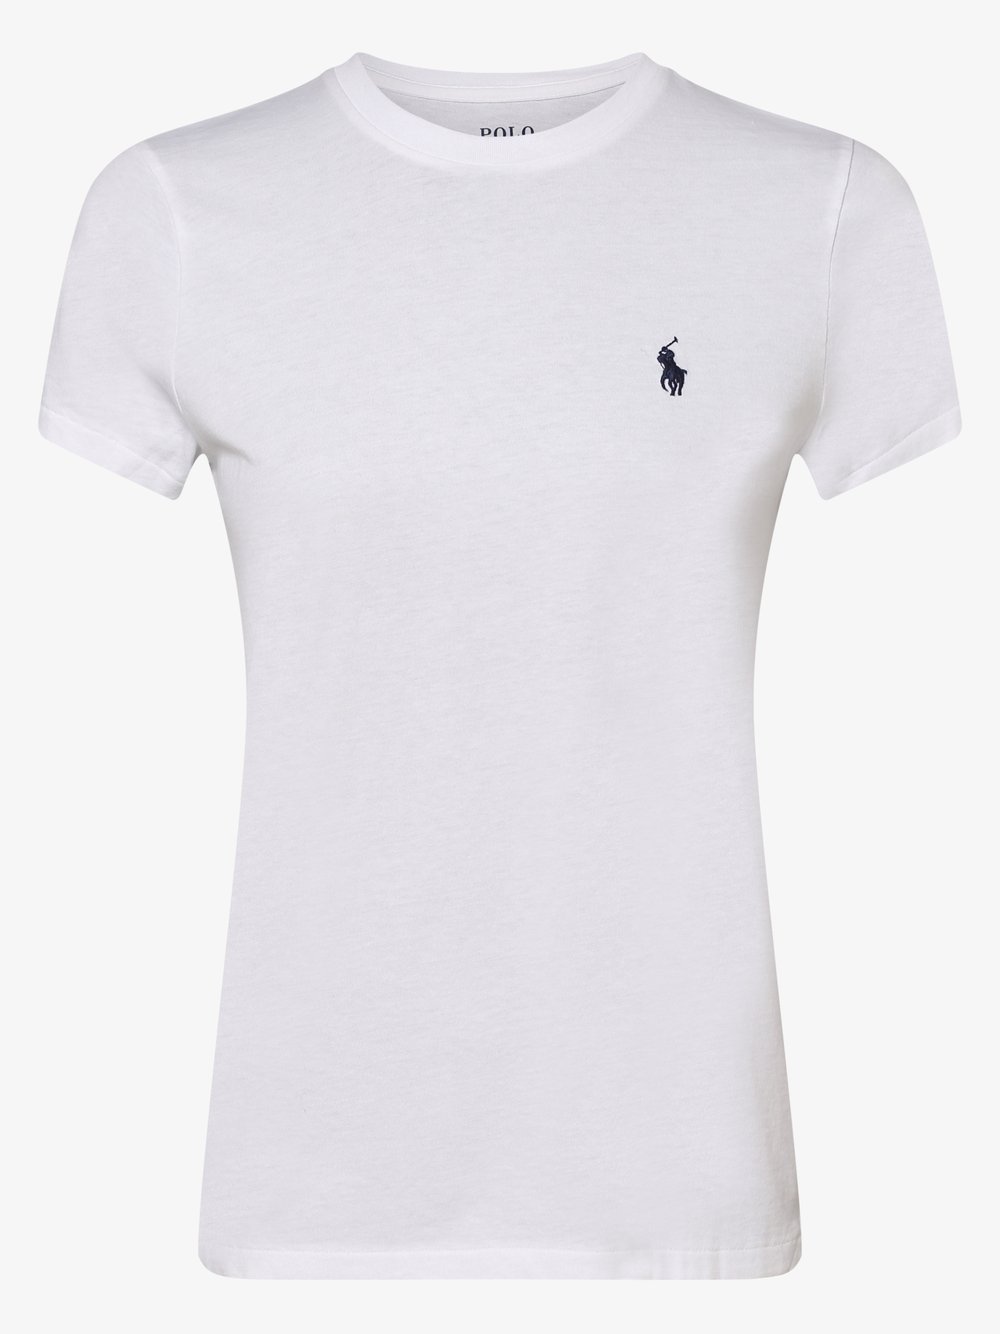 Polo Ralph Lauren - T-shirt damski, biały Polo Ralph Lauren